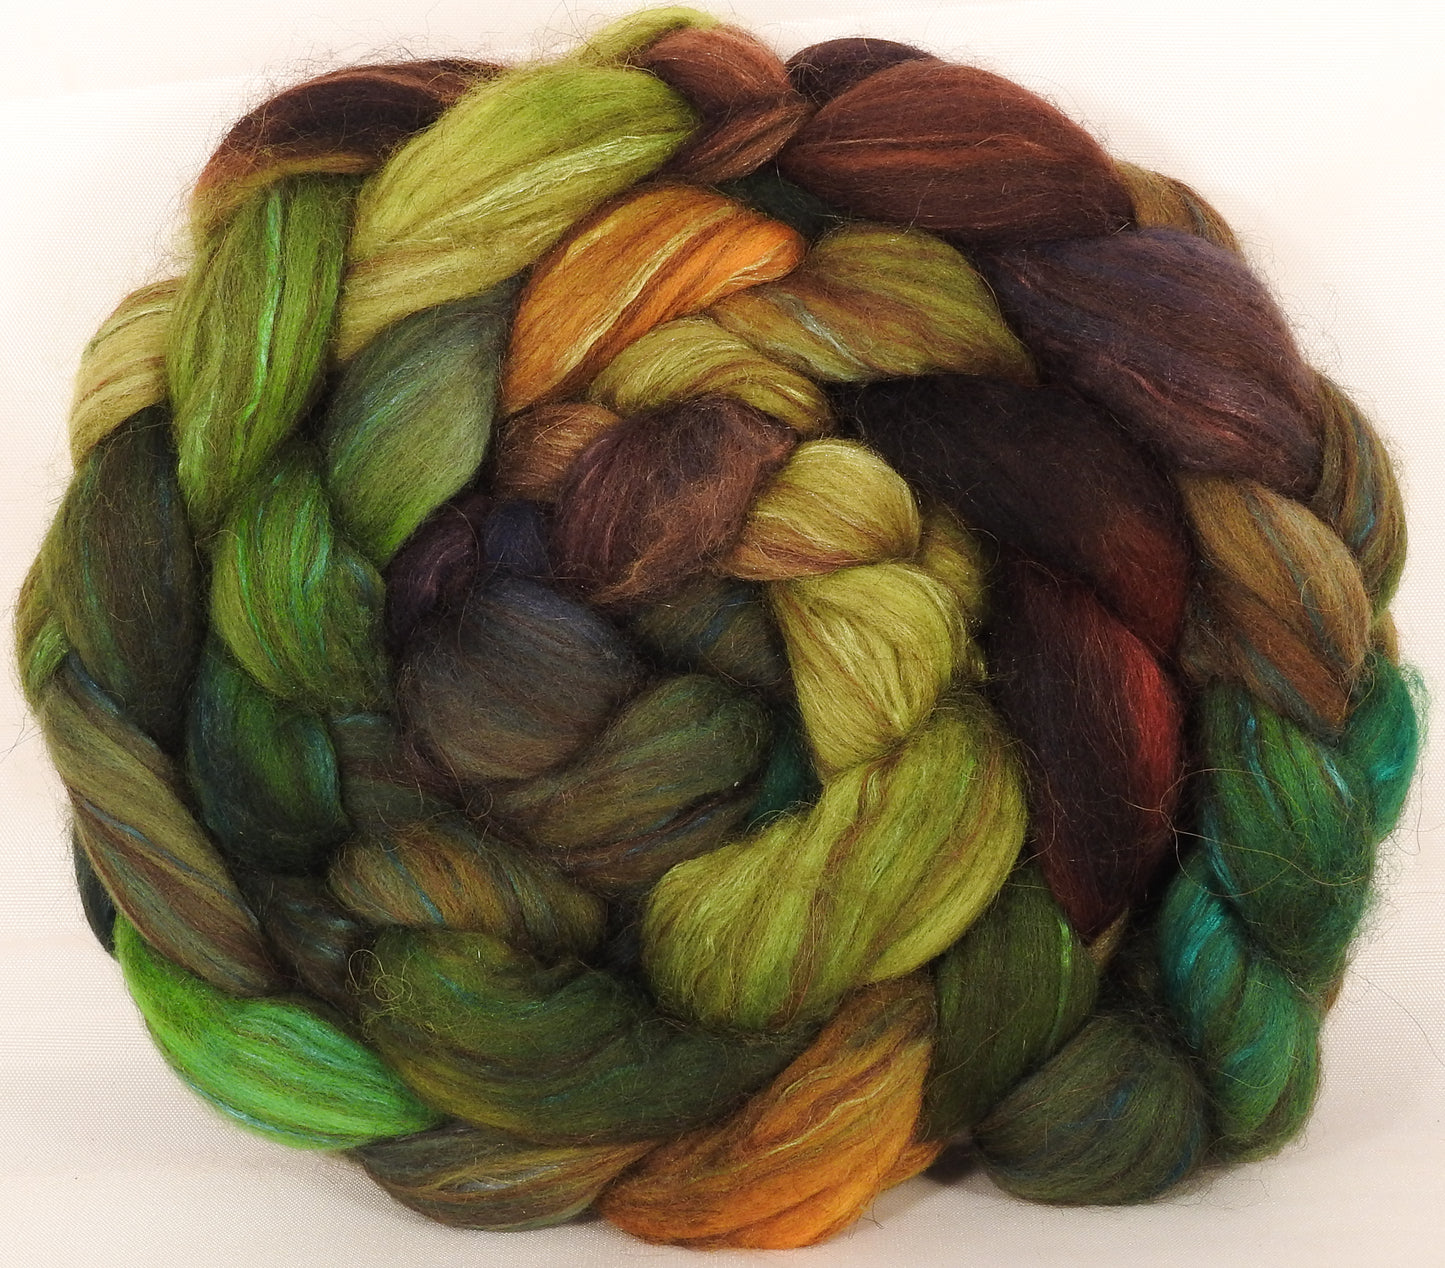 Hand dyed top for spinning -Mossy- 18.5 mic merino/ camel/ brown alpaca/ mulberry silk/ (40/20/20/20) - Inglenook Fibers